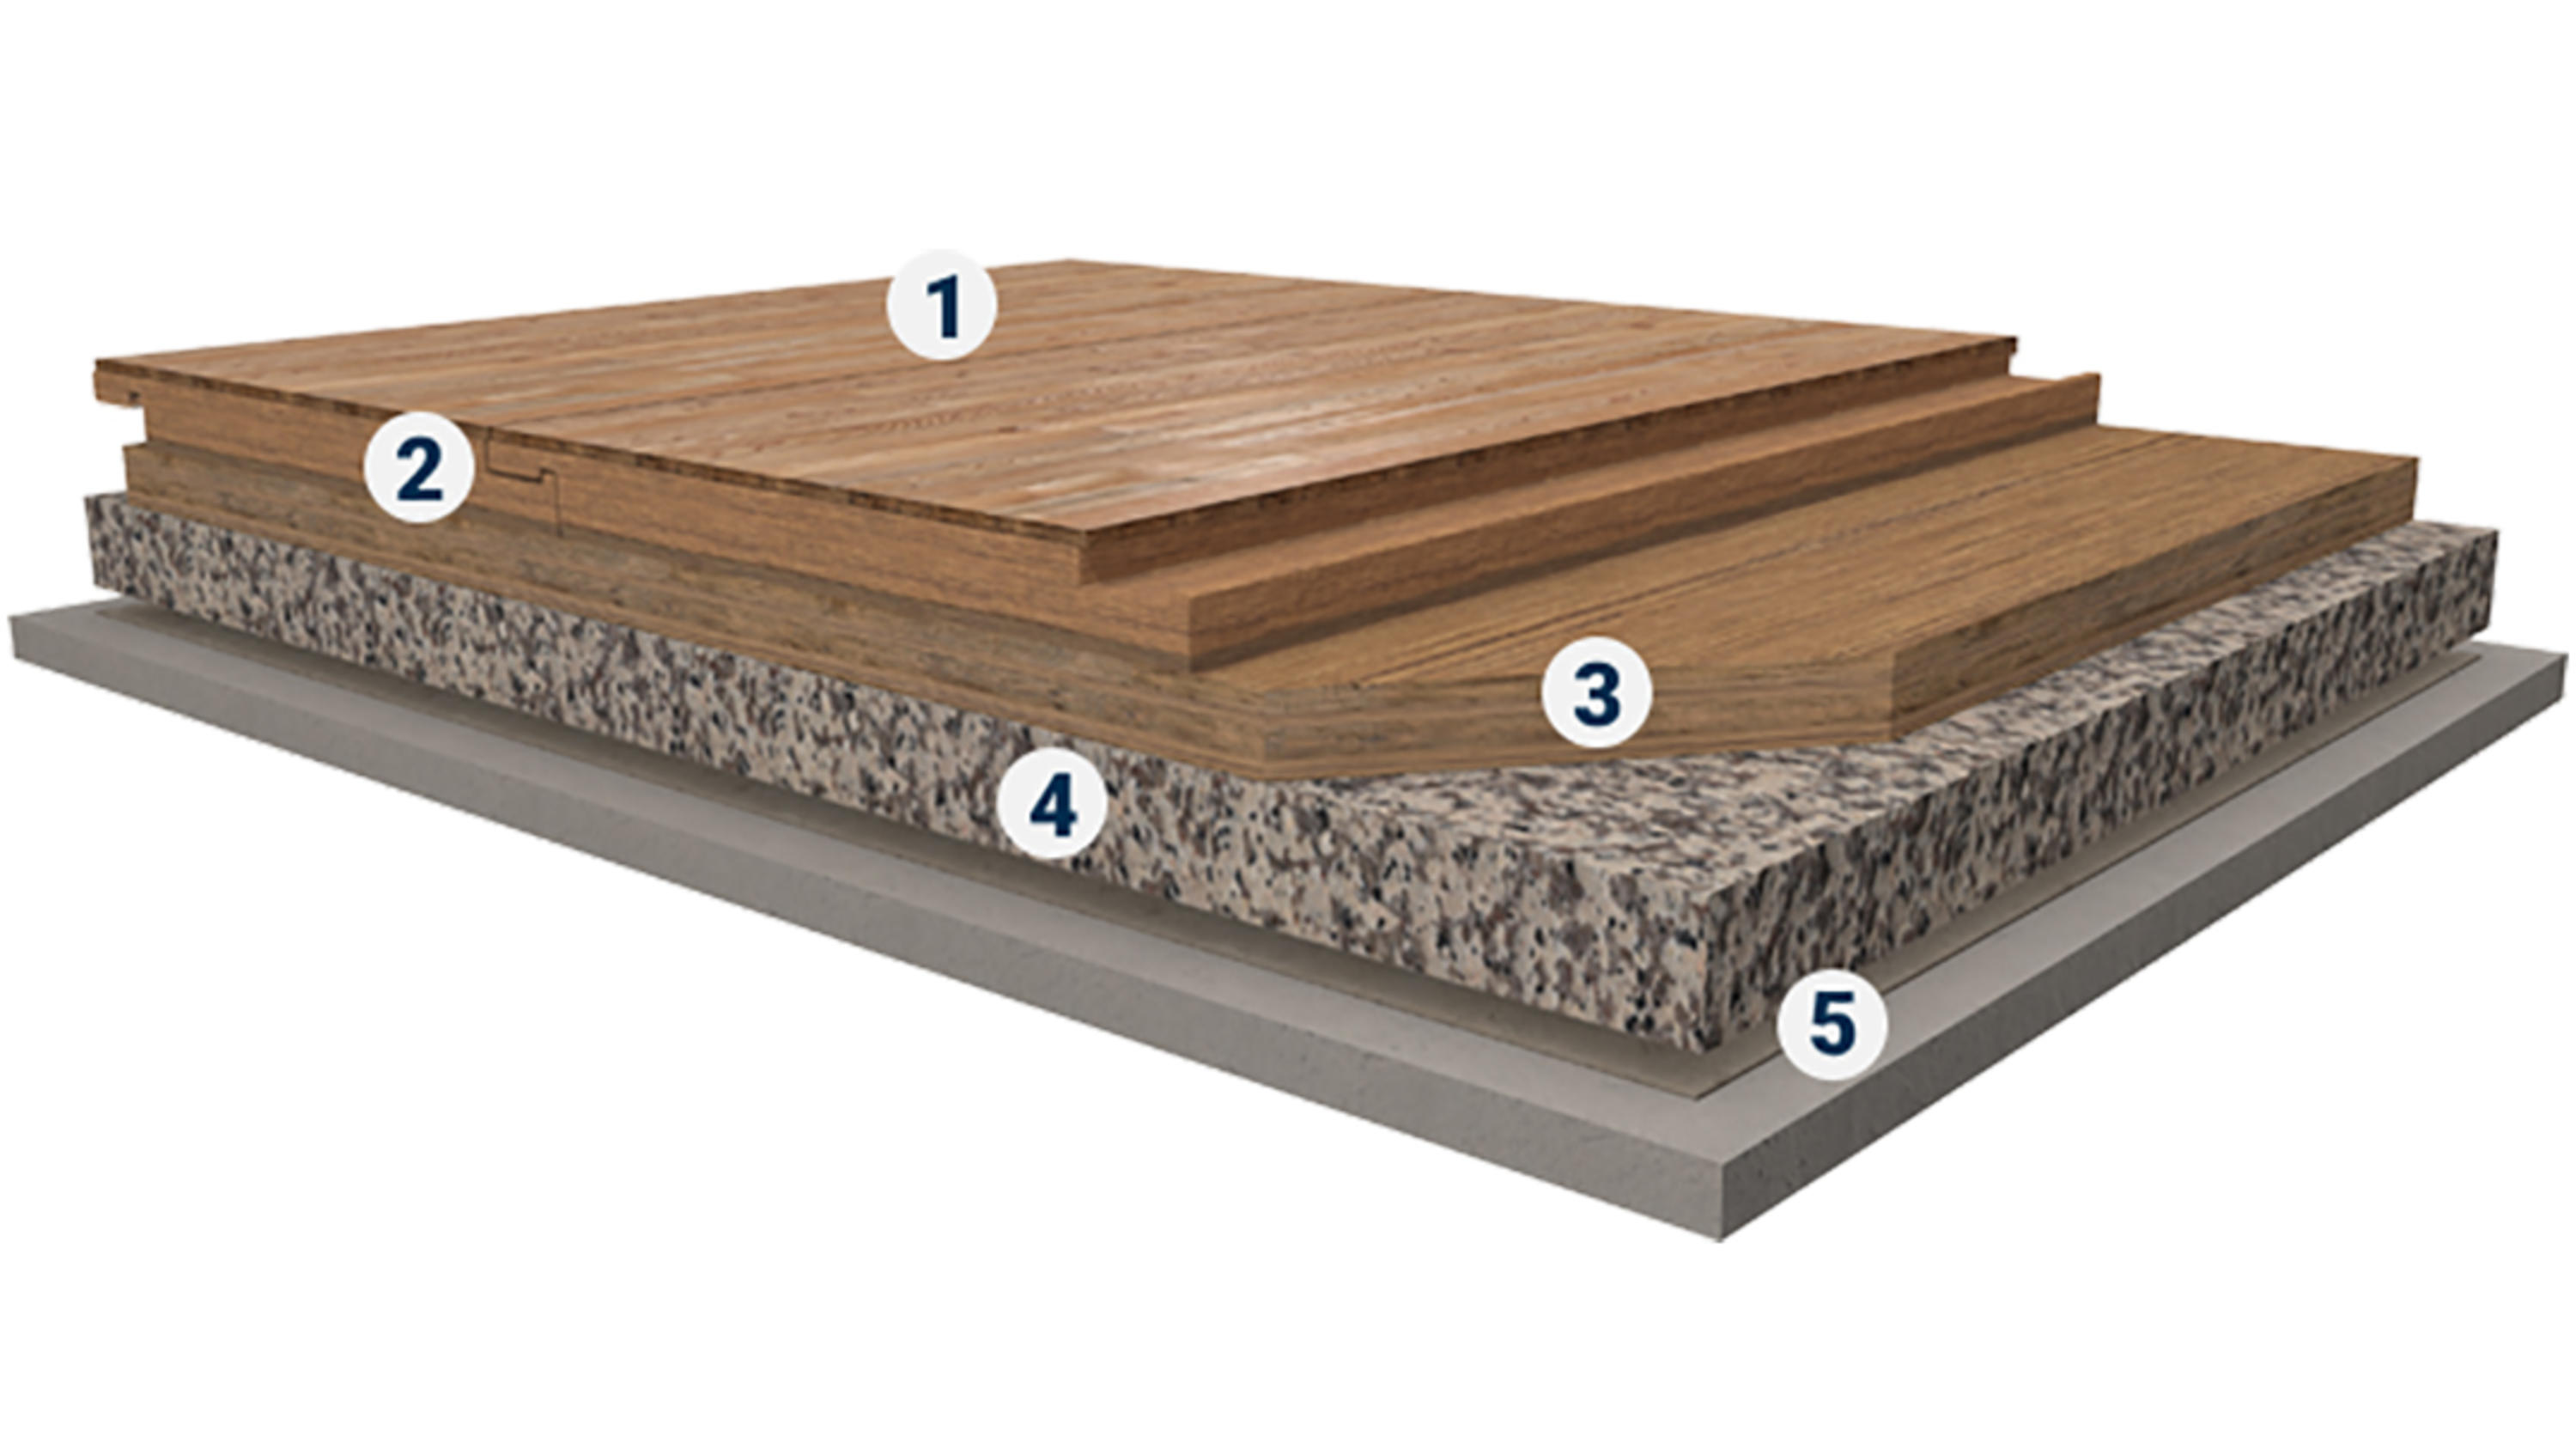 Multiflex M: indoor sports multilayer wood flooring solution for